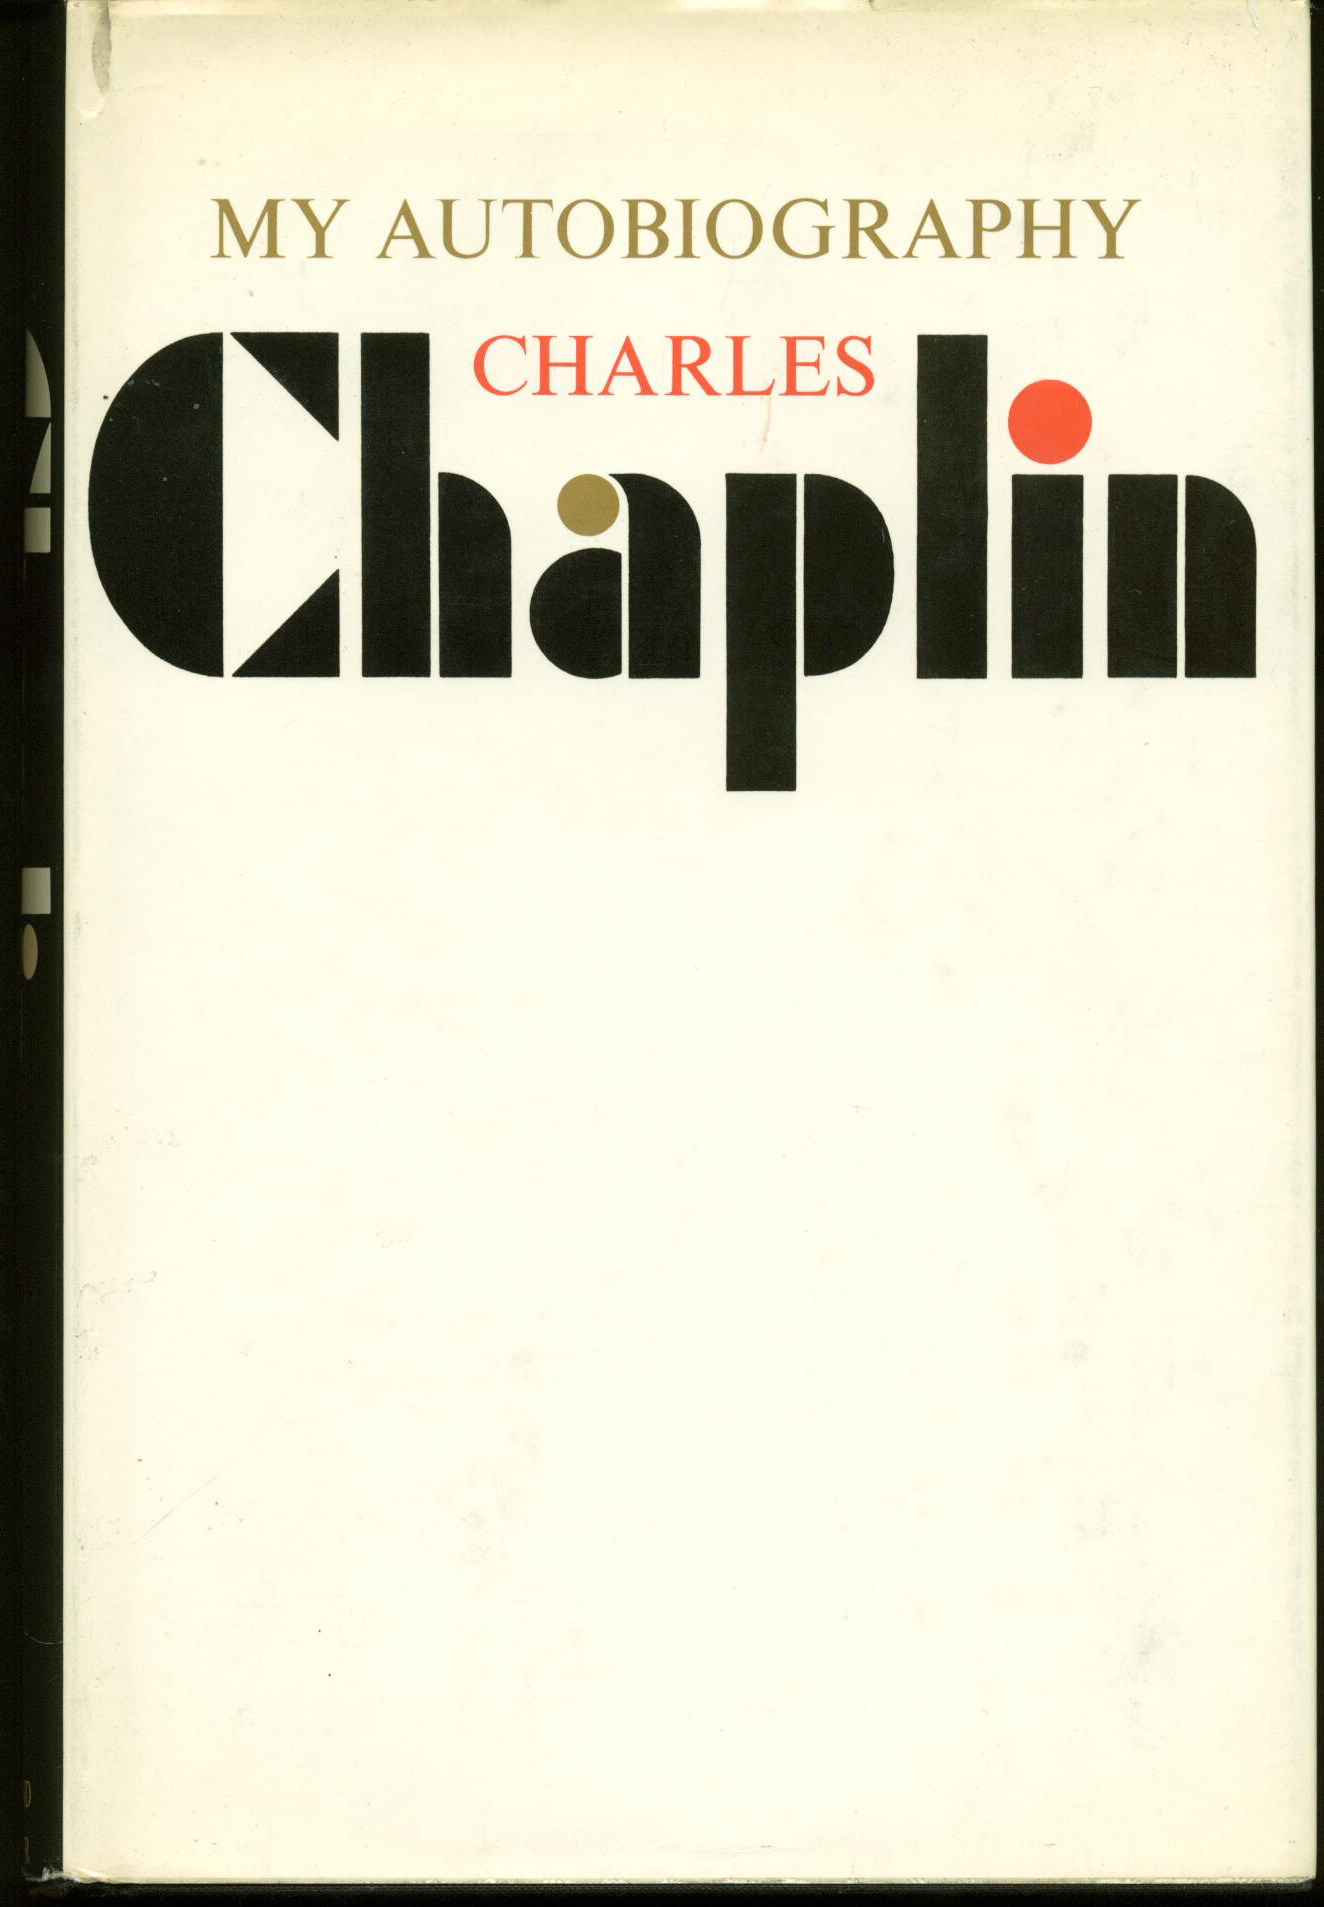 charlie chaplin autobiography